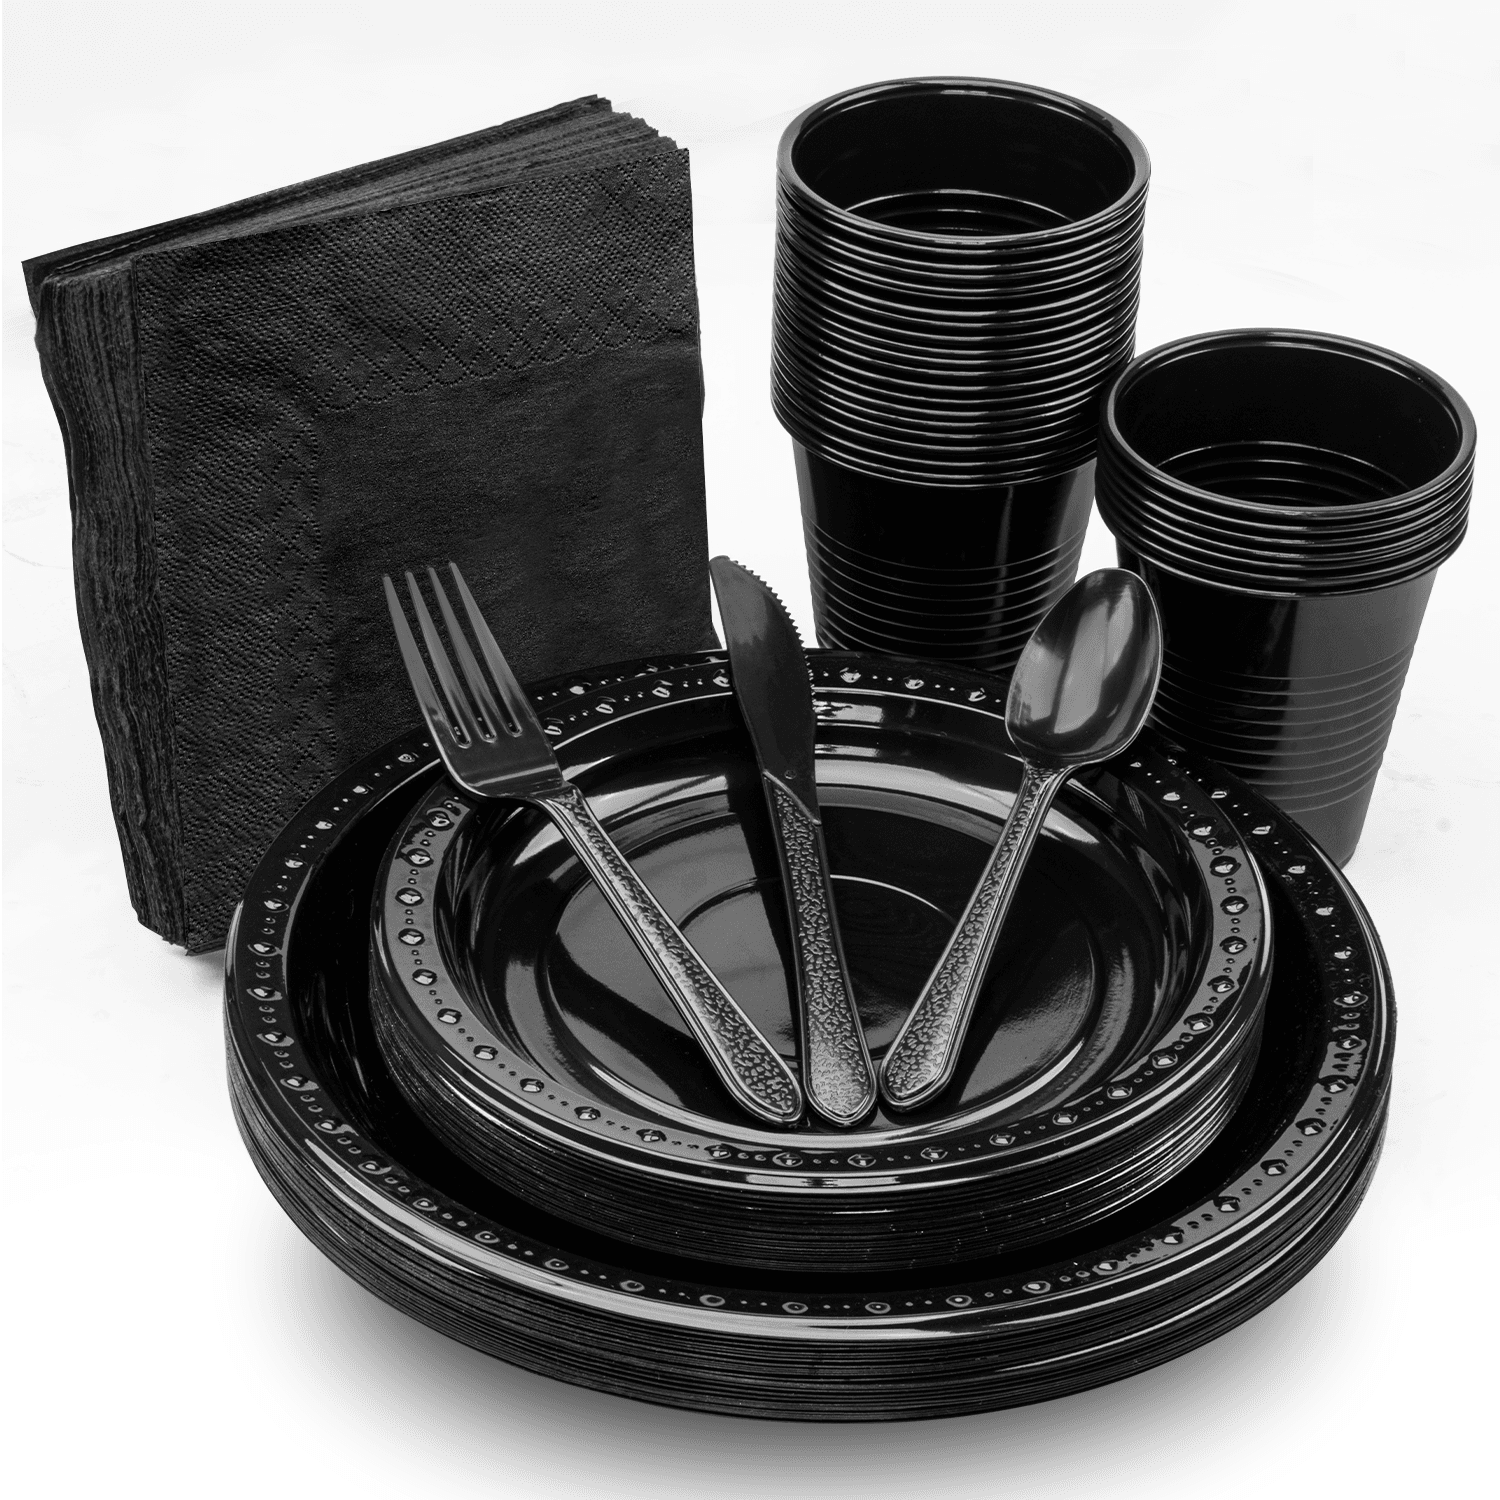 Karat Party Dinnerware Set (Plate, Cup, Fork, Knife, Spoon, Napkin), Black - 25 sets